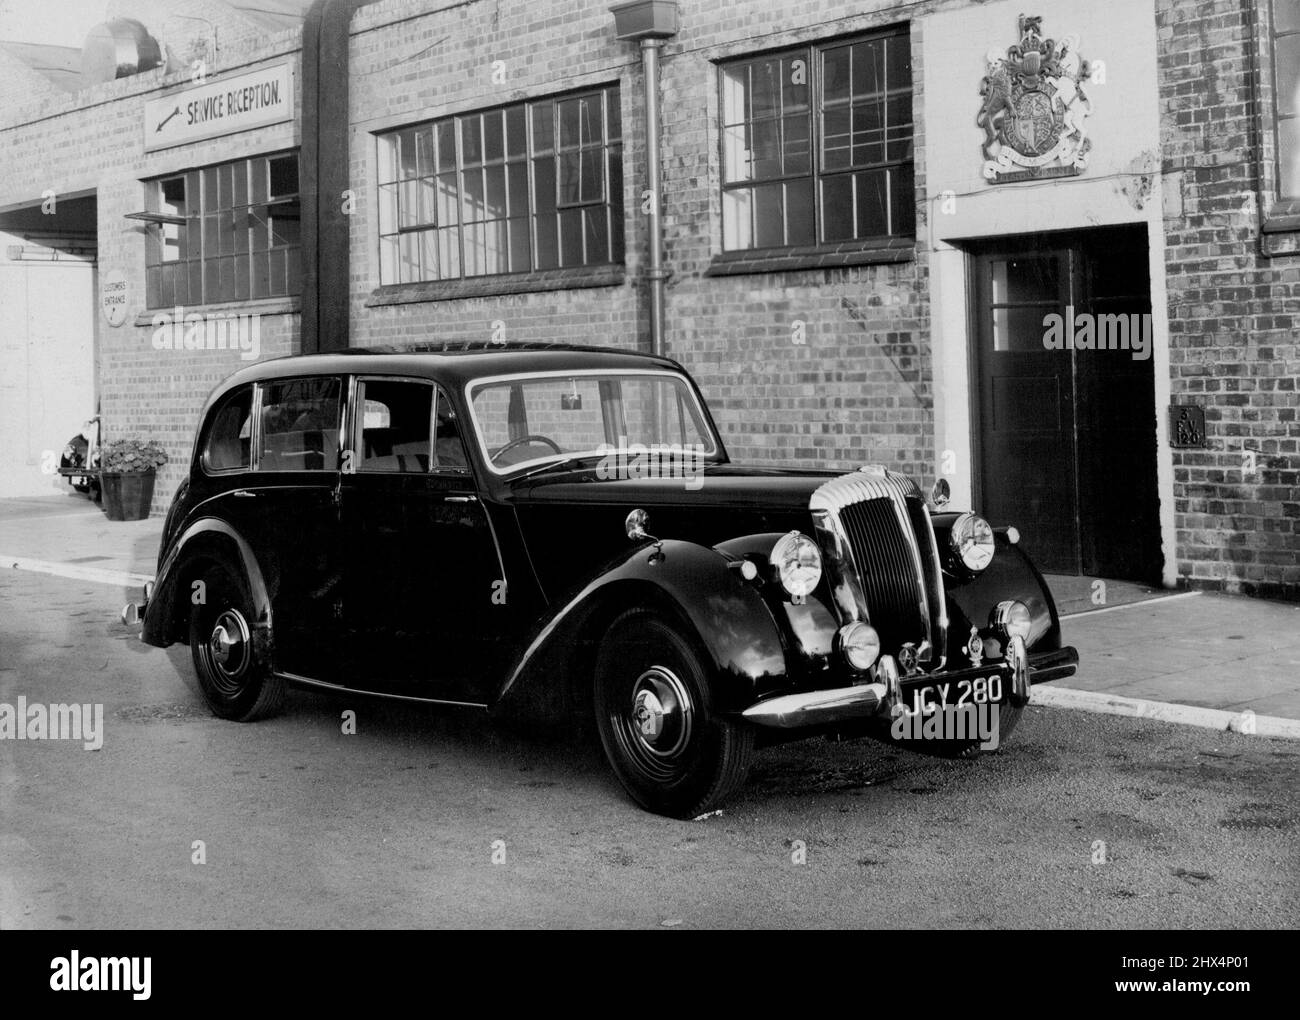 Cars (Royal) - British Royalty - General. December 12, 1950. Stock Photo